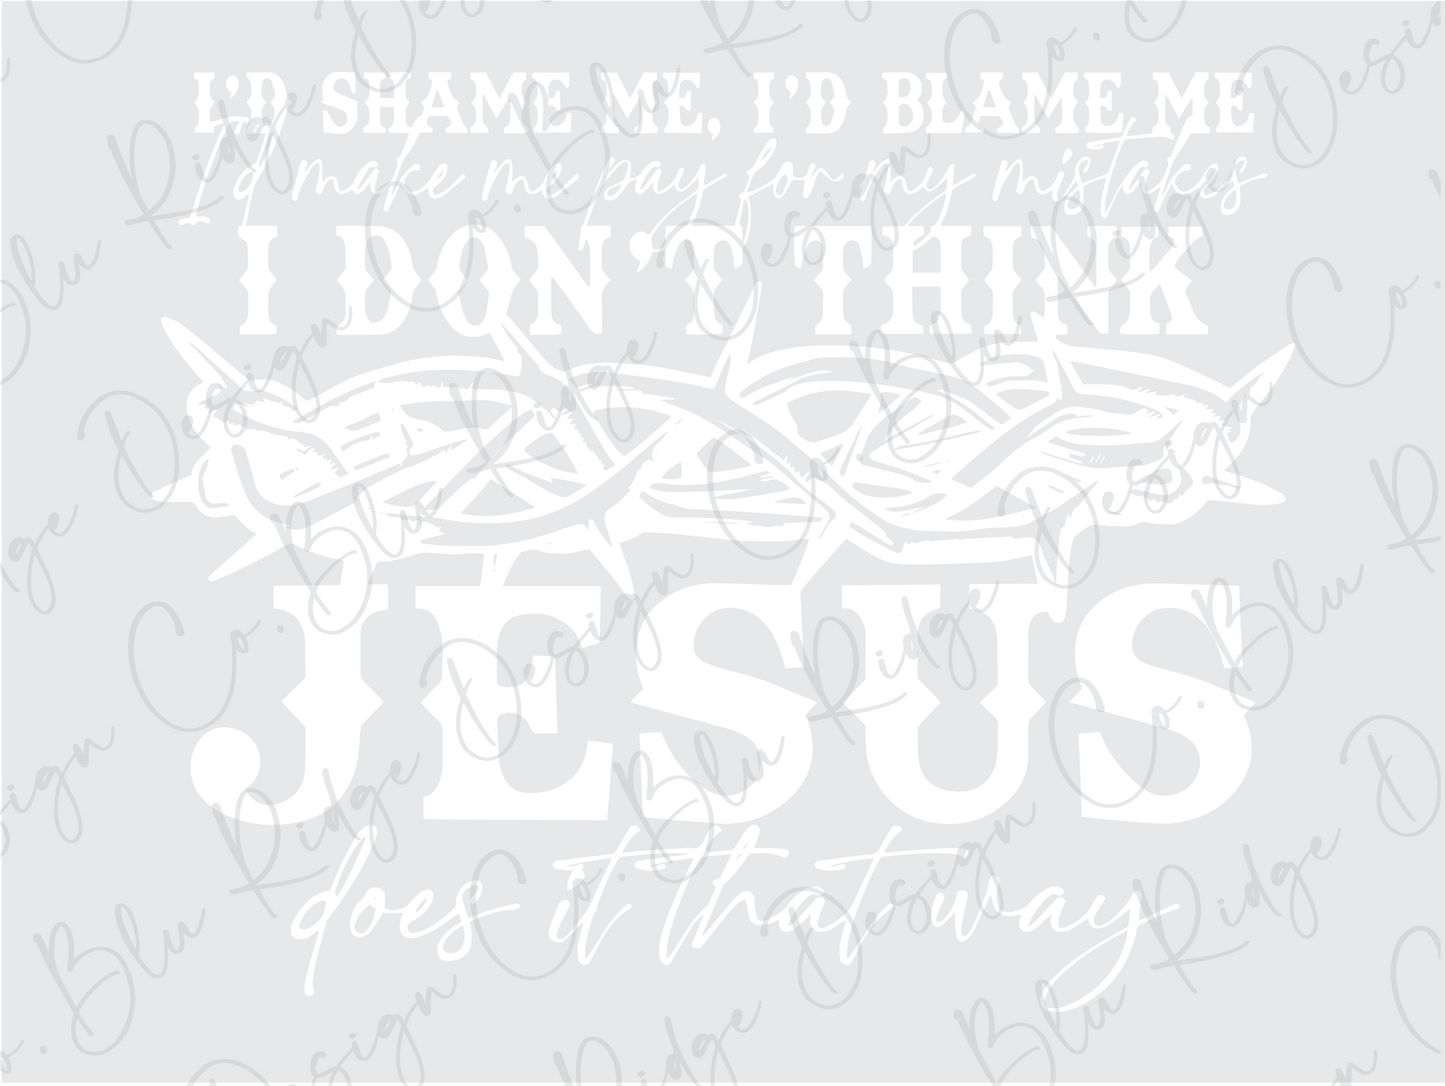 I'd Shame me I'd Blame Me, Don't think Jesus Does it That Way Direct To Film (DTF) Transfer